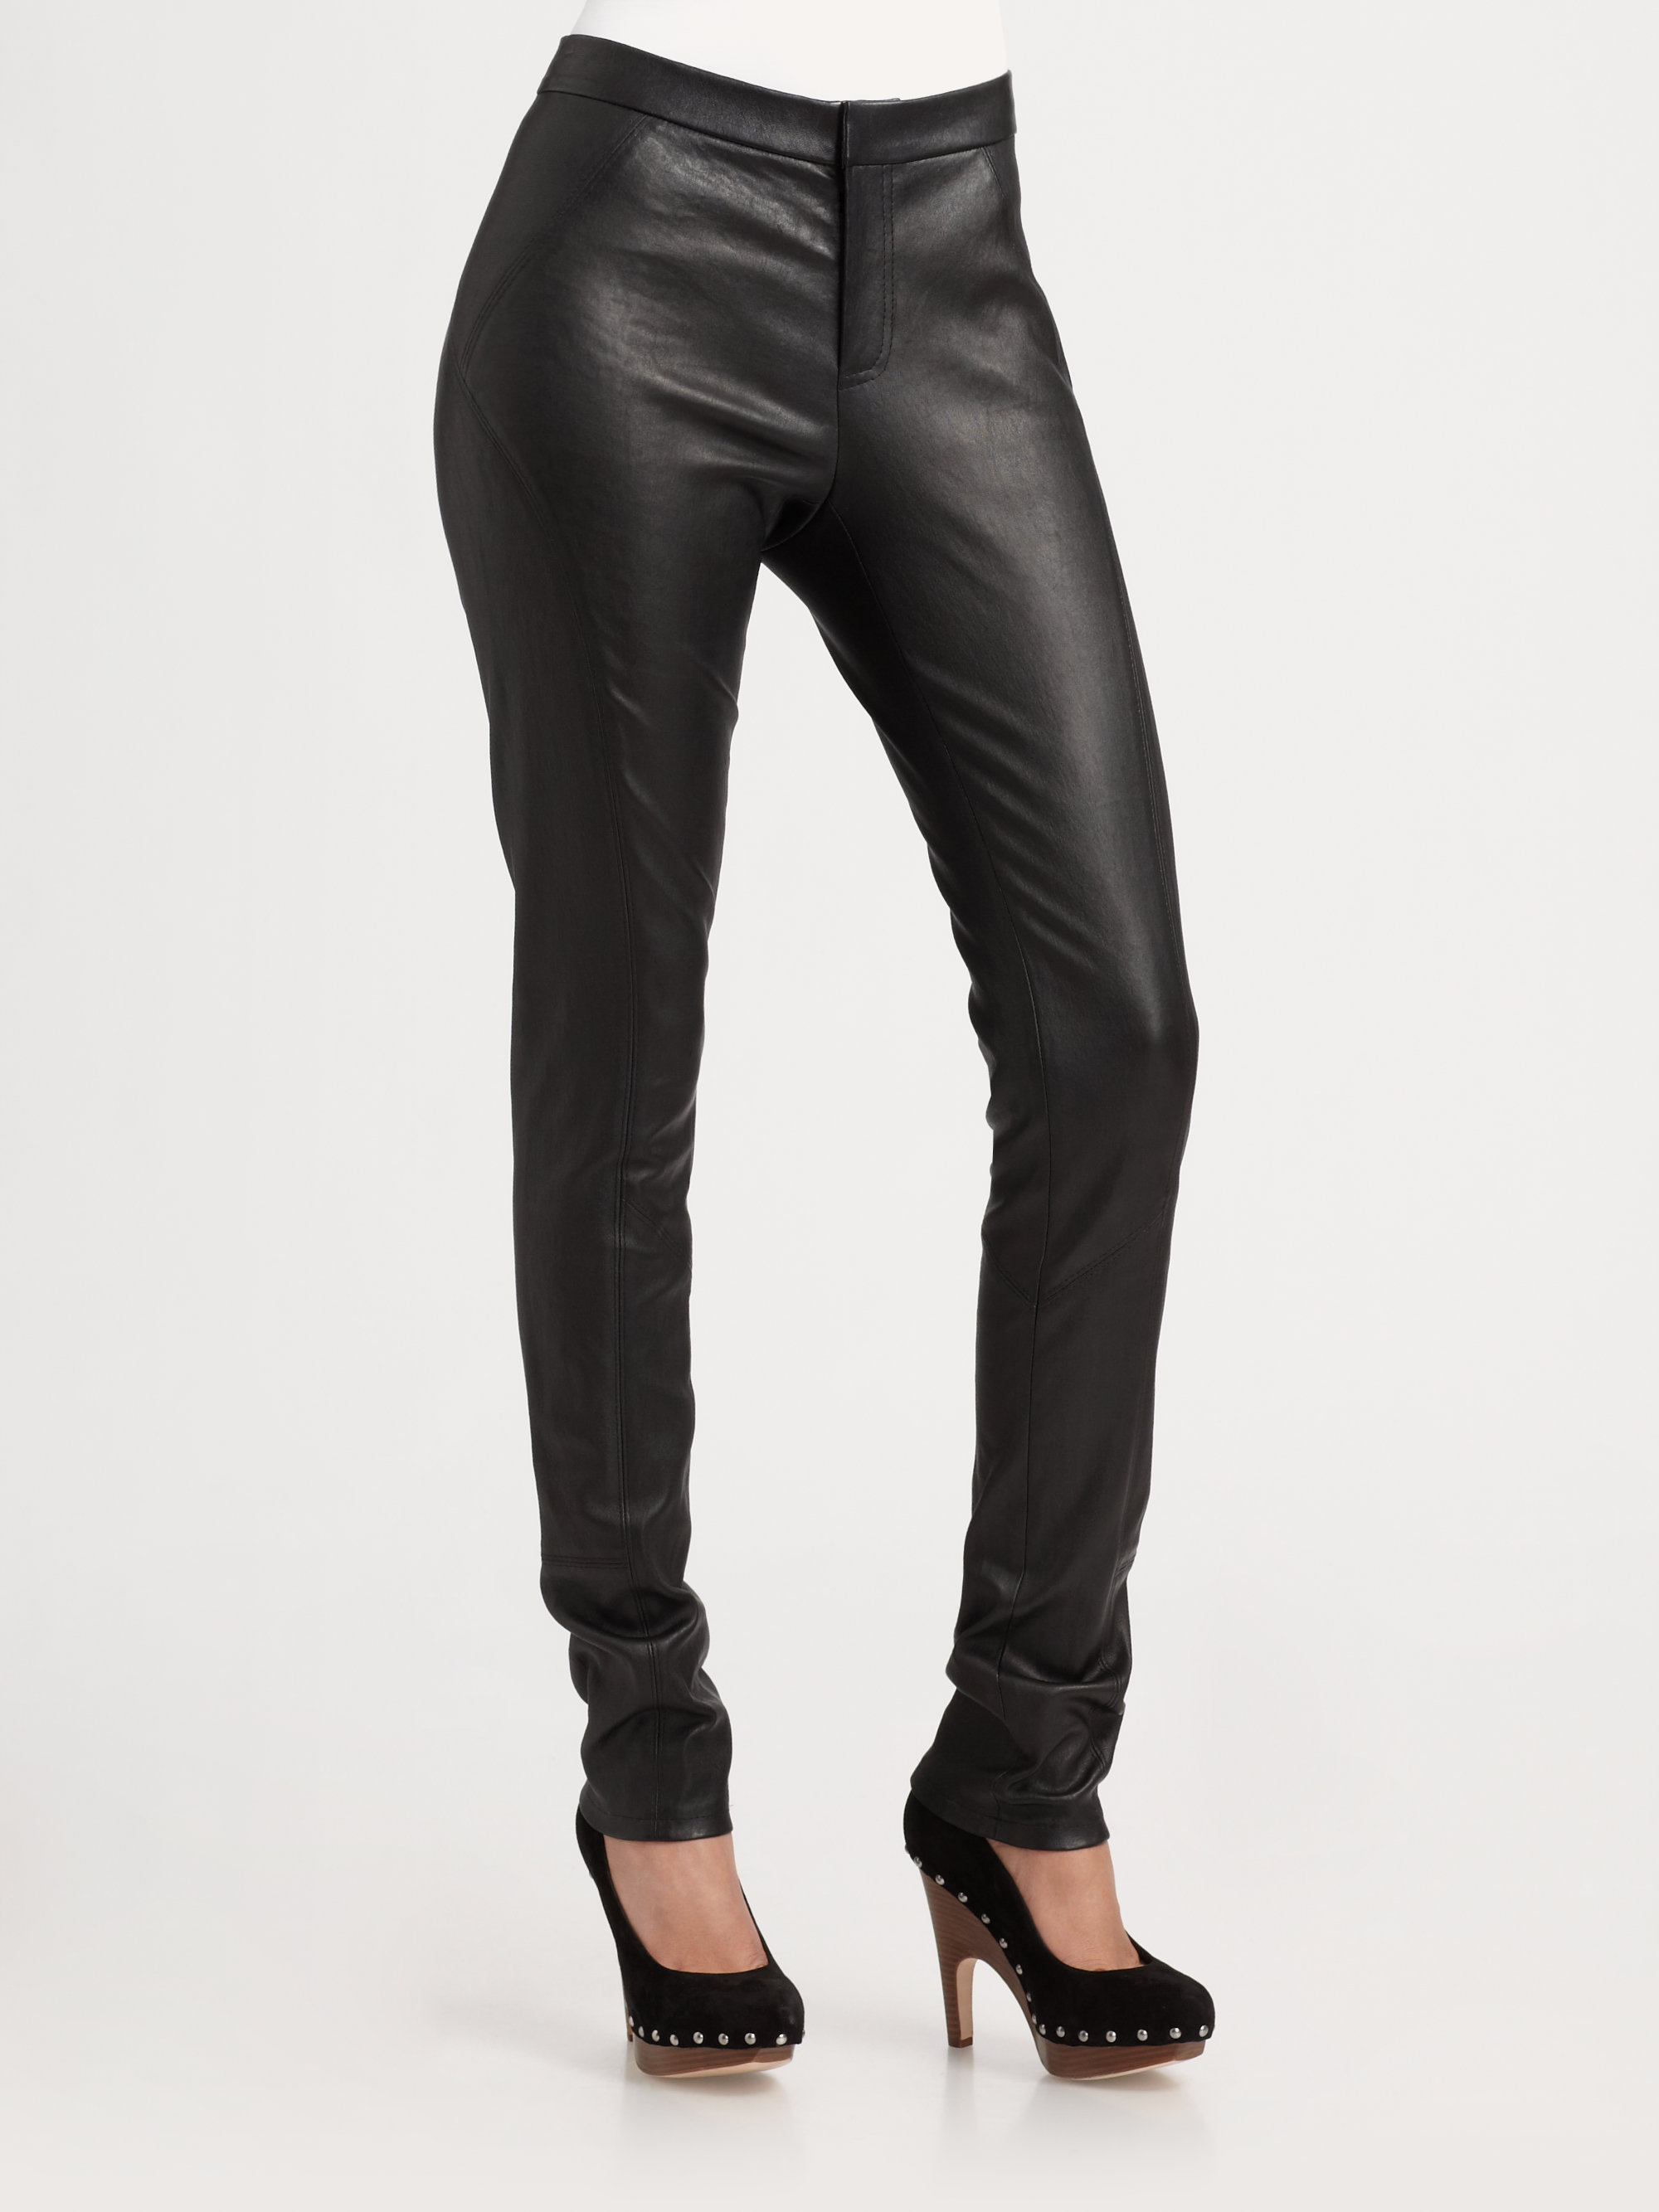 Elie tahari Stretch Leather Pants in Black | Lyst